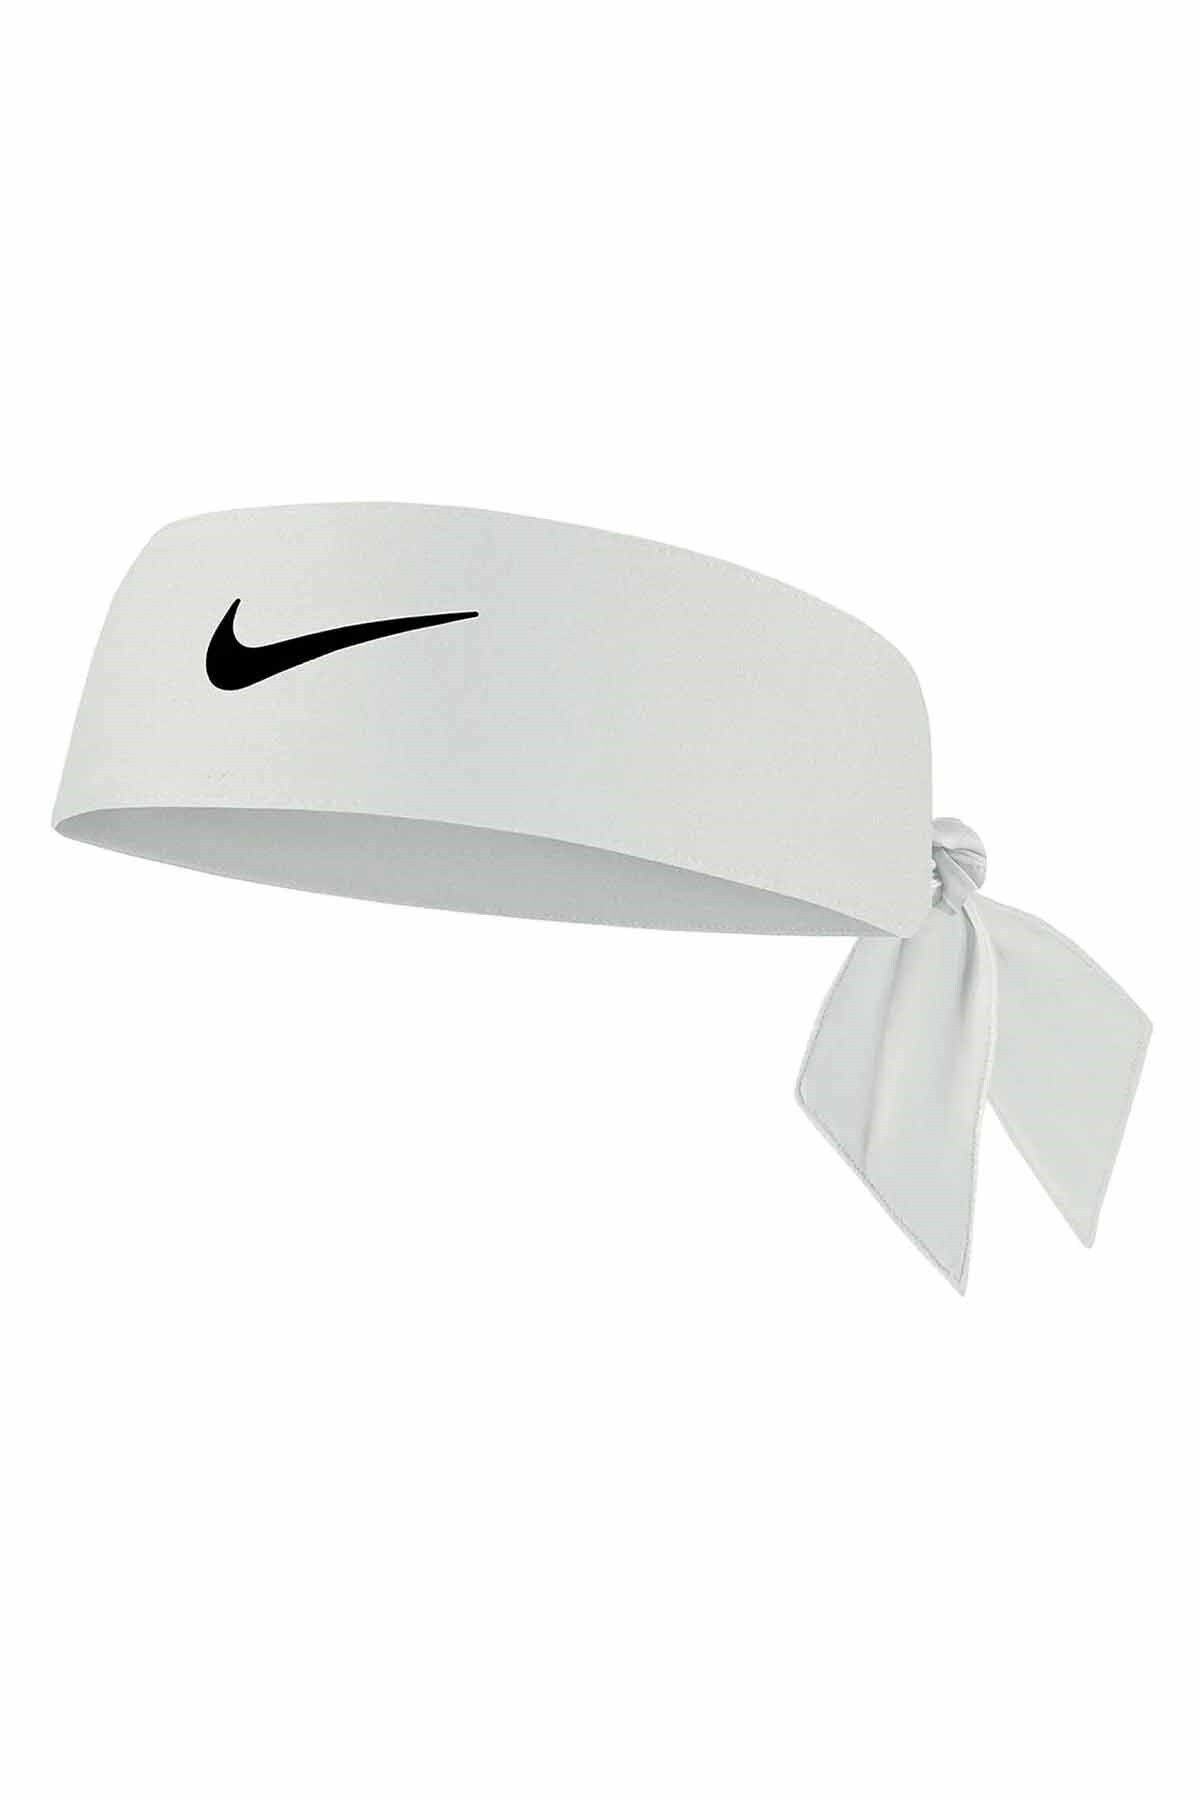 Nike Dri-fit Unisex Unisex Saç Bandı N.100.2146.101.os-beyaz-syh